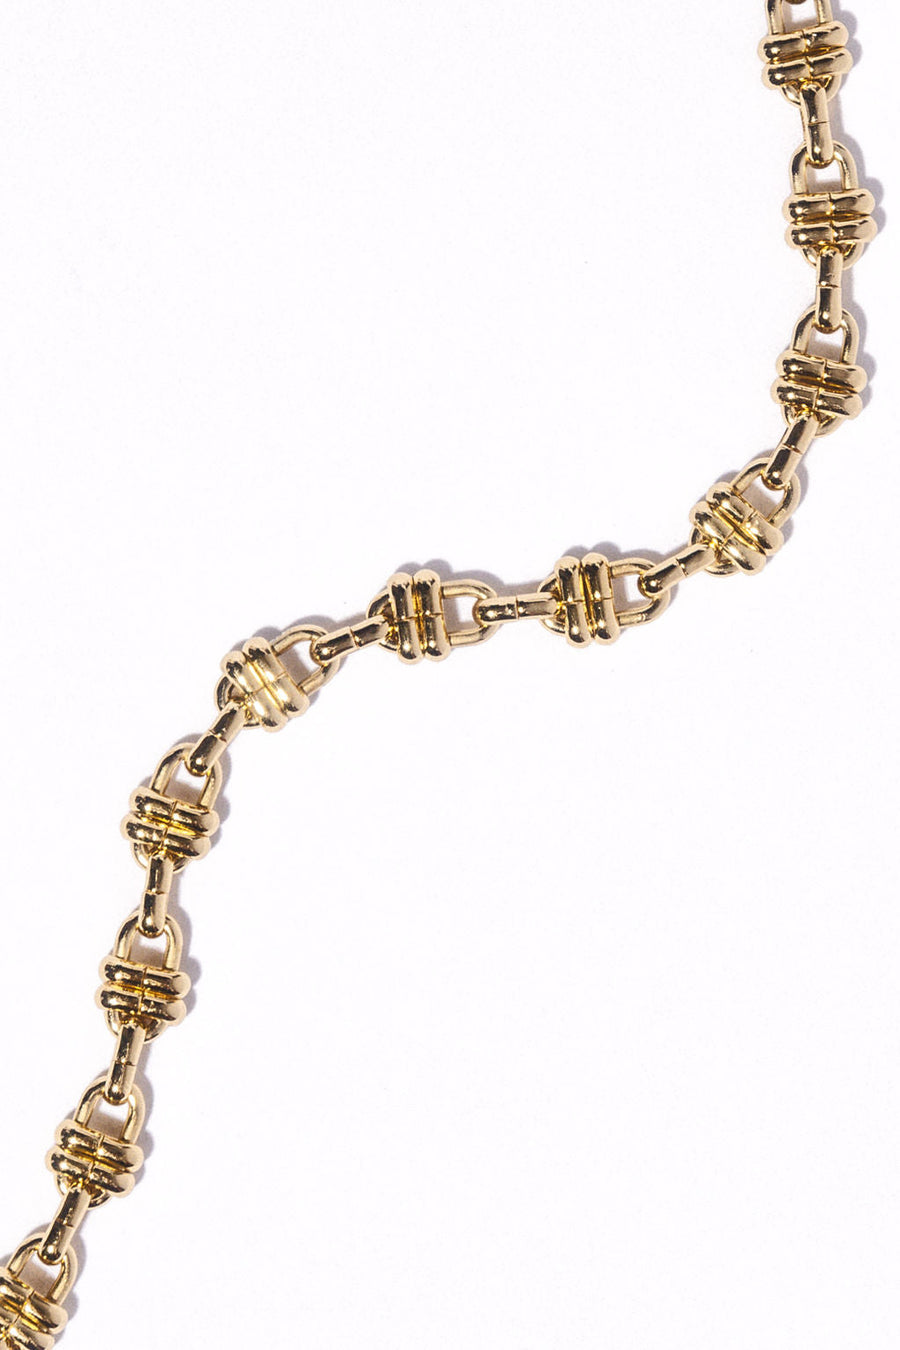 Goddess Jewelry Gold Serket Goddess Bracelet